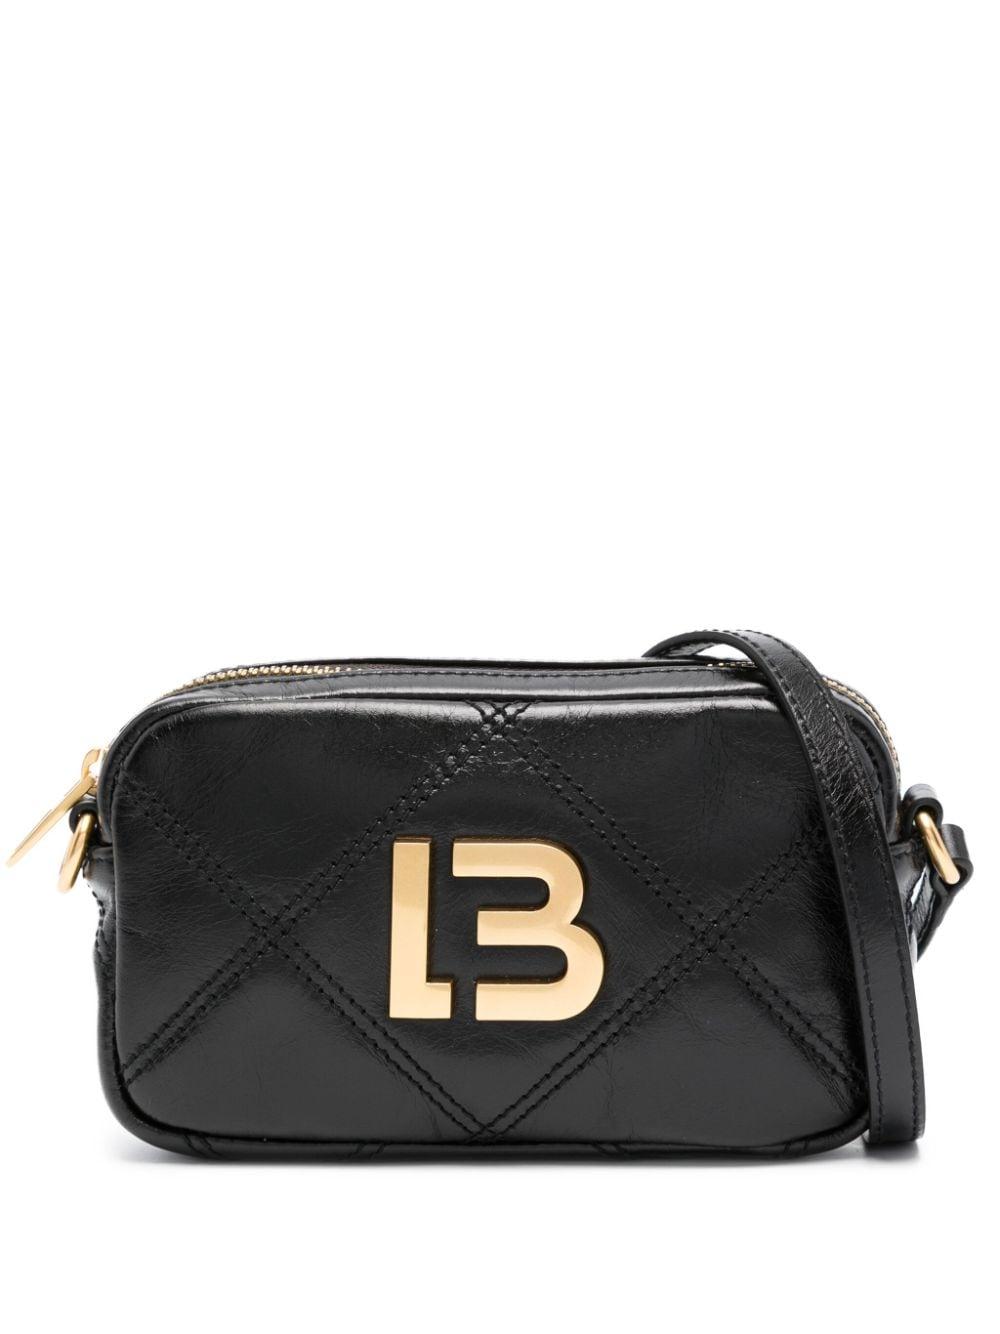 Bimba y Lola logo-print Leather Belt Bag - Farfetch